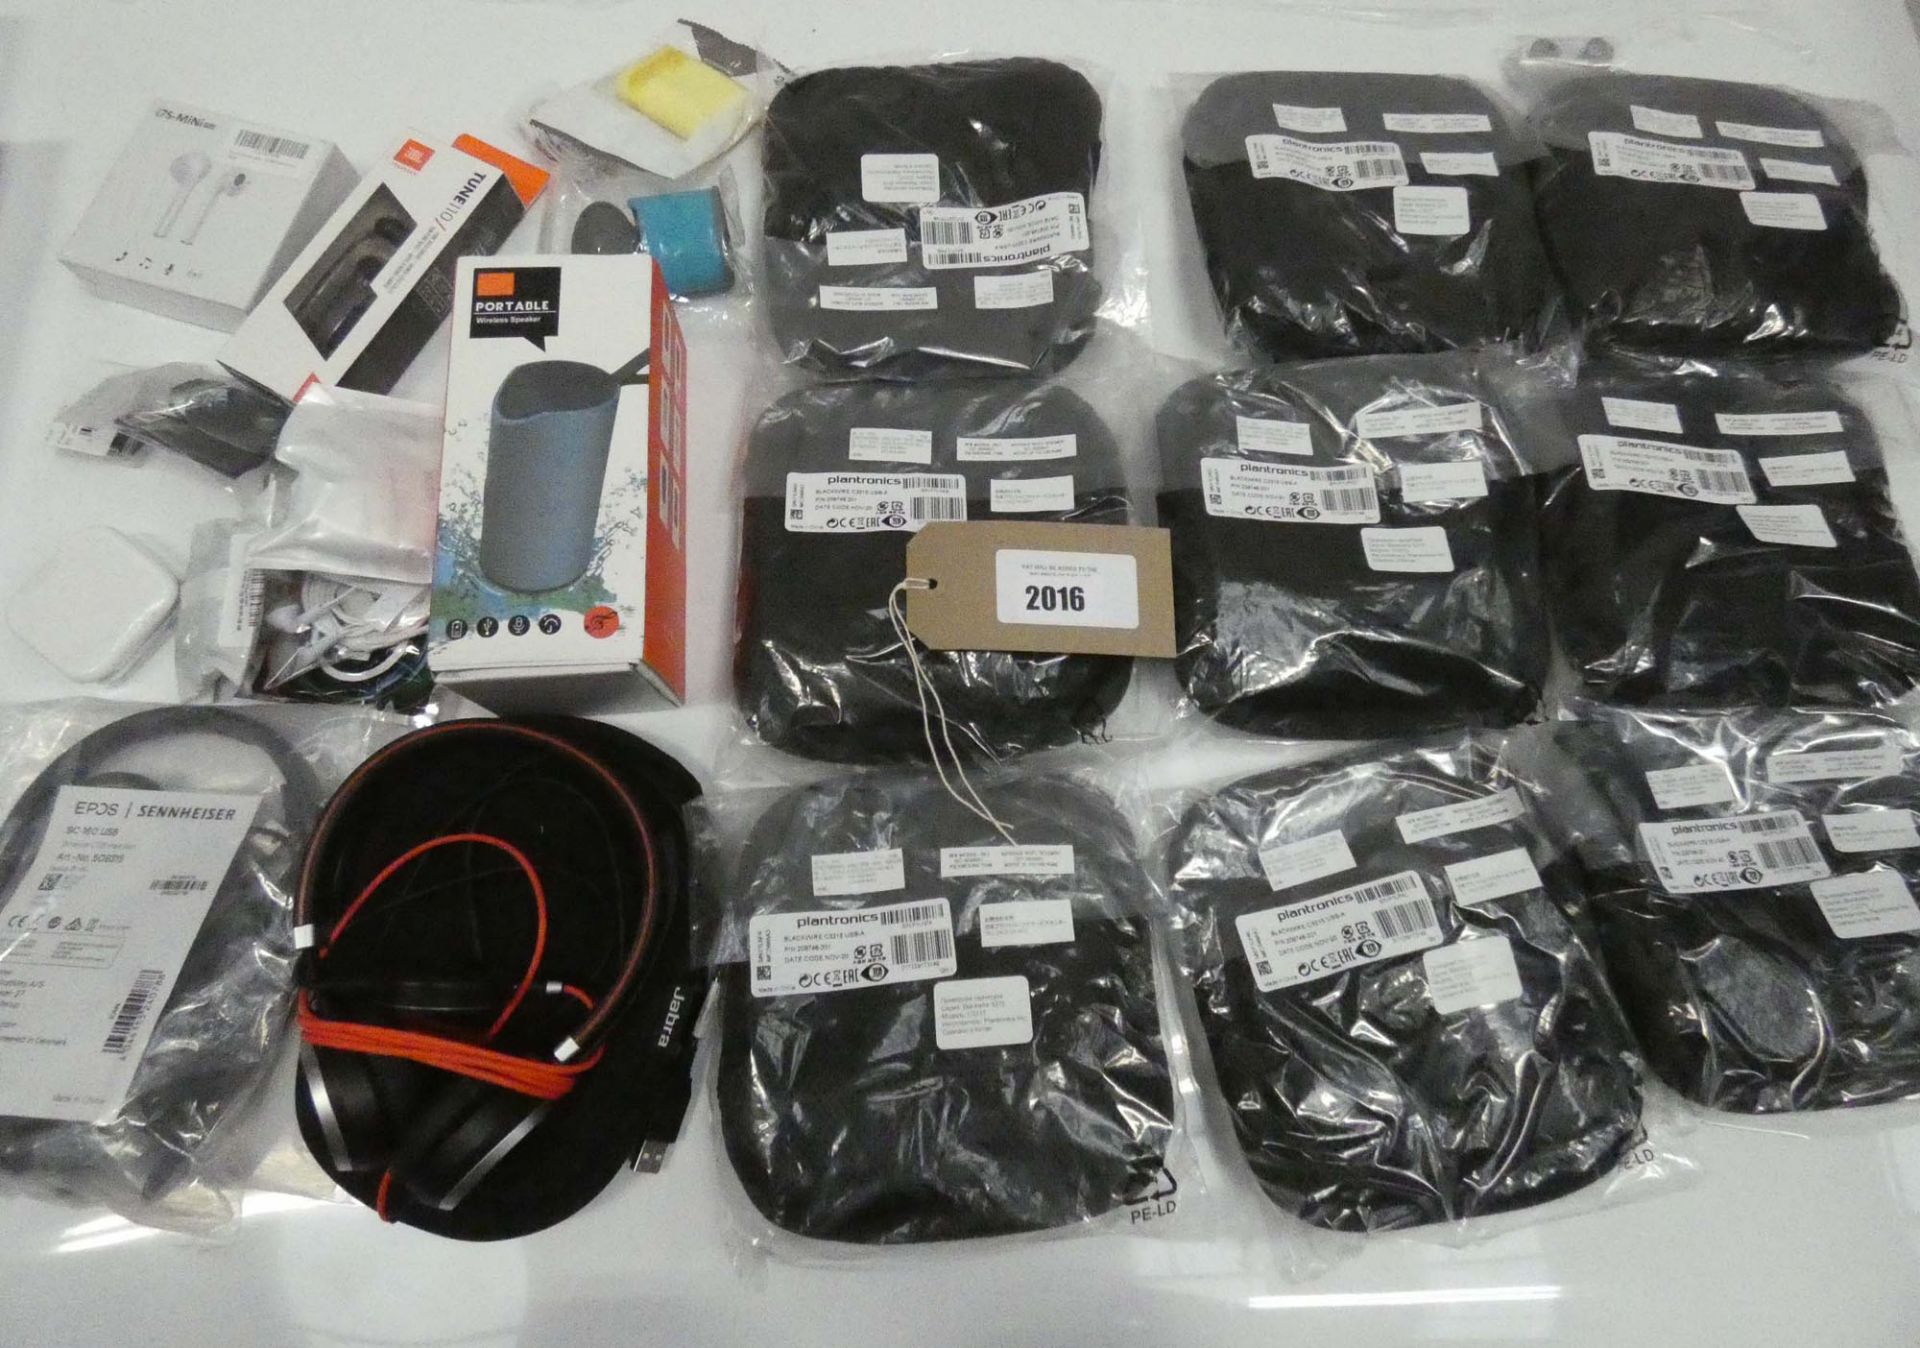 Bag containing 9x Plantronic Blackwire headsets, Jabra headset, wireless speaker, earphones etc